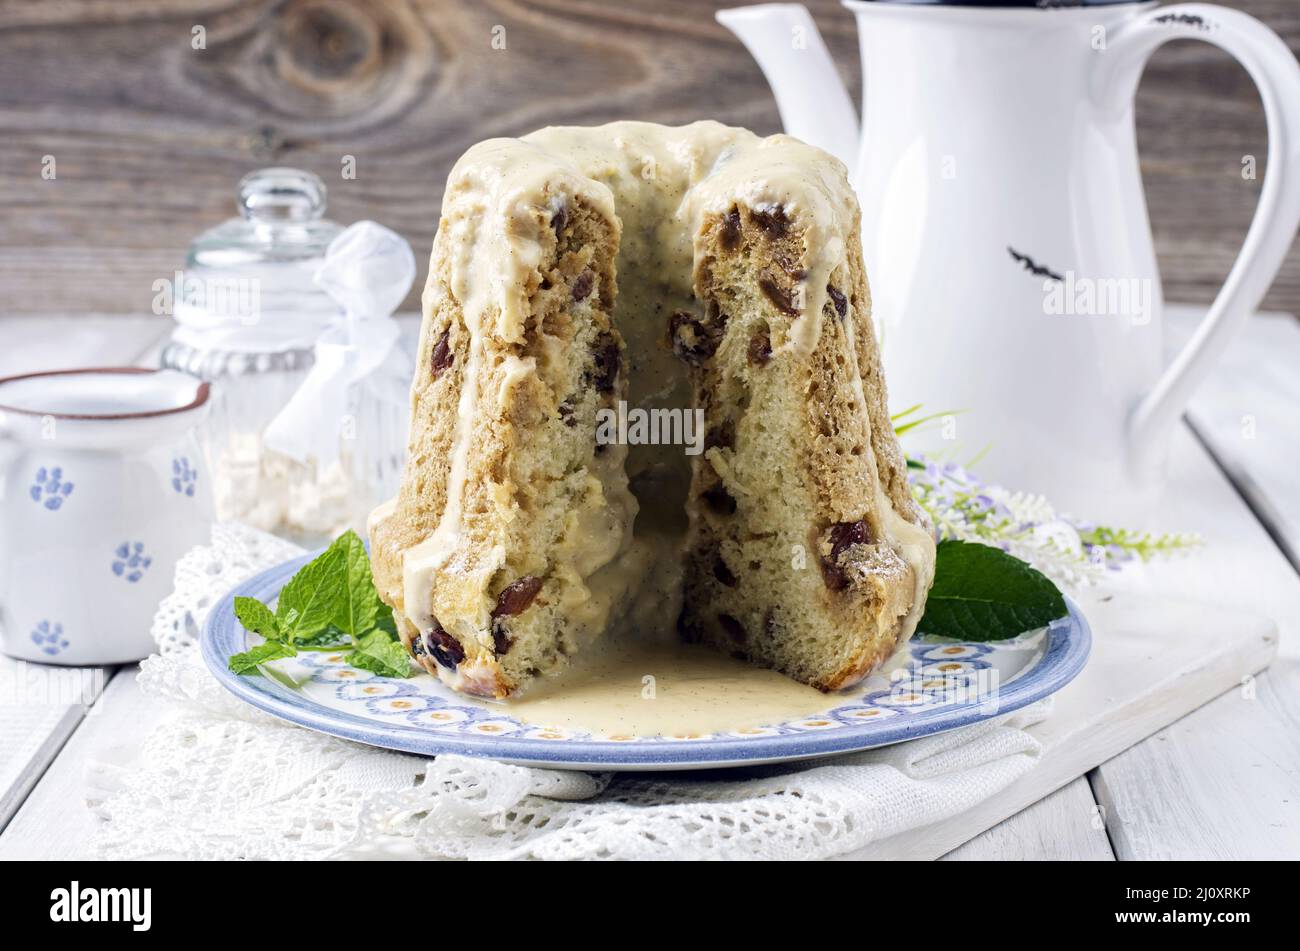 Bundt cake with raisins Stock Photo